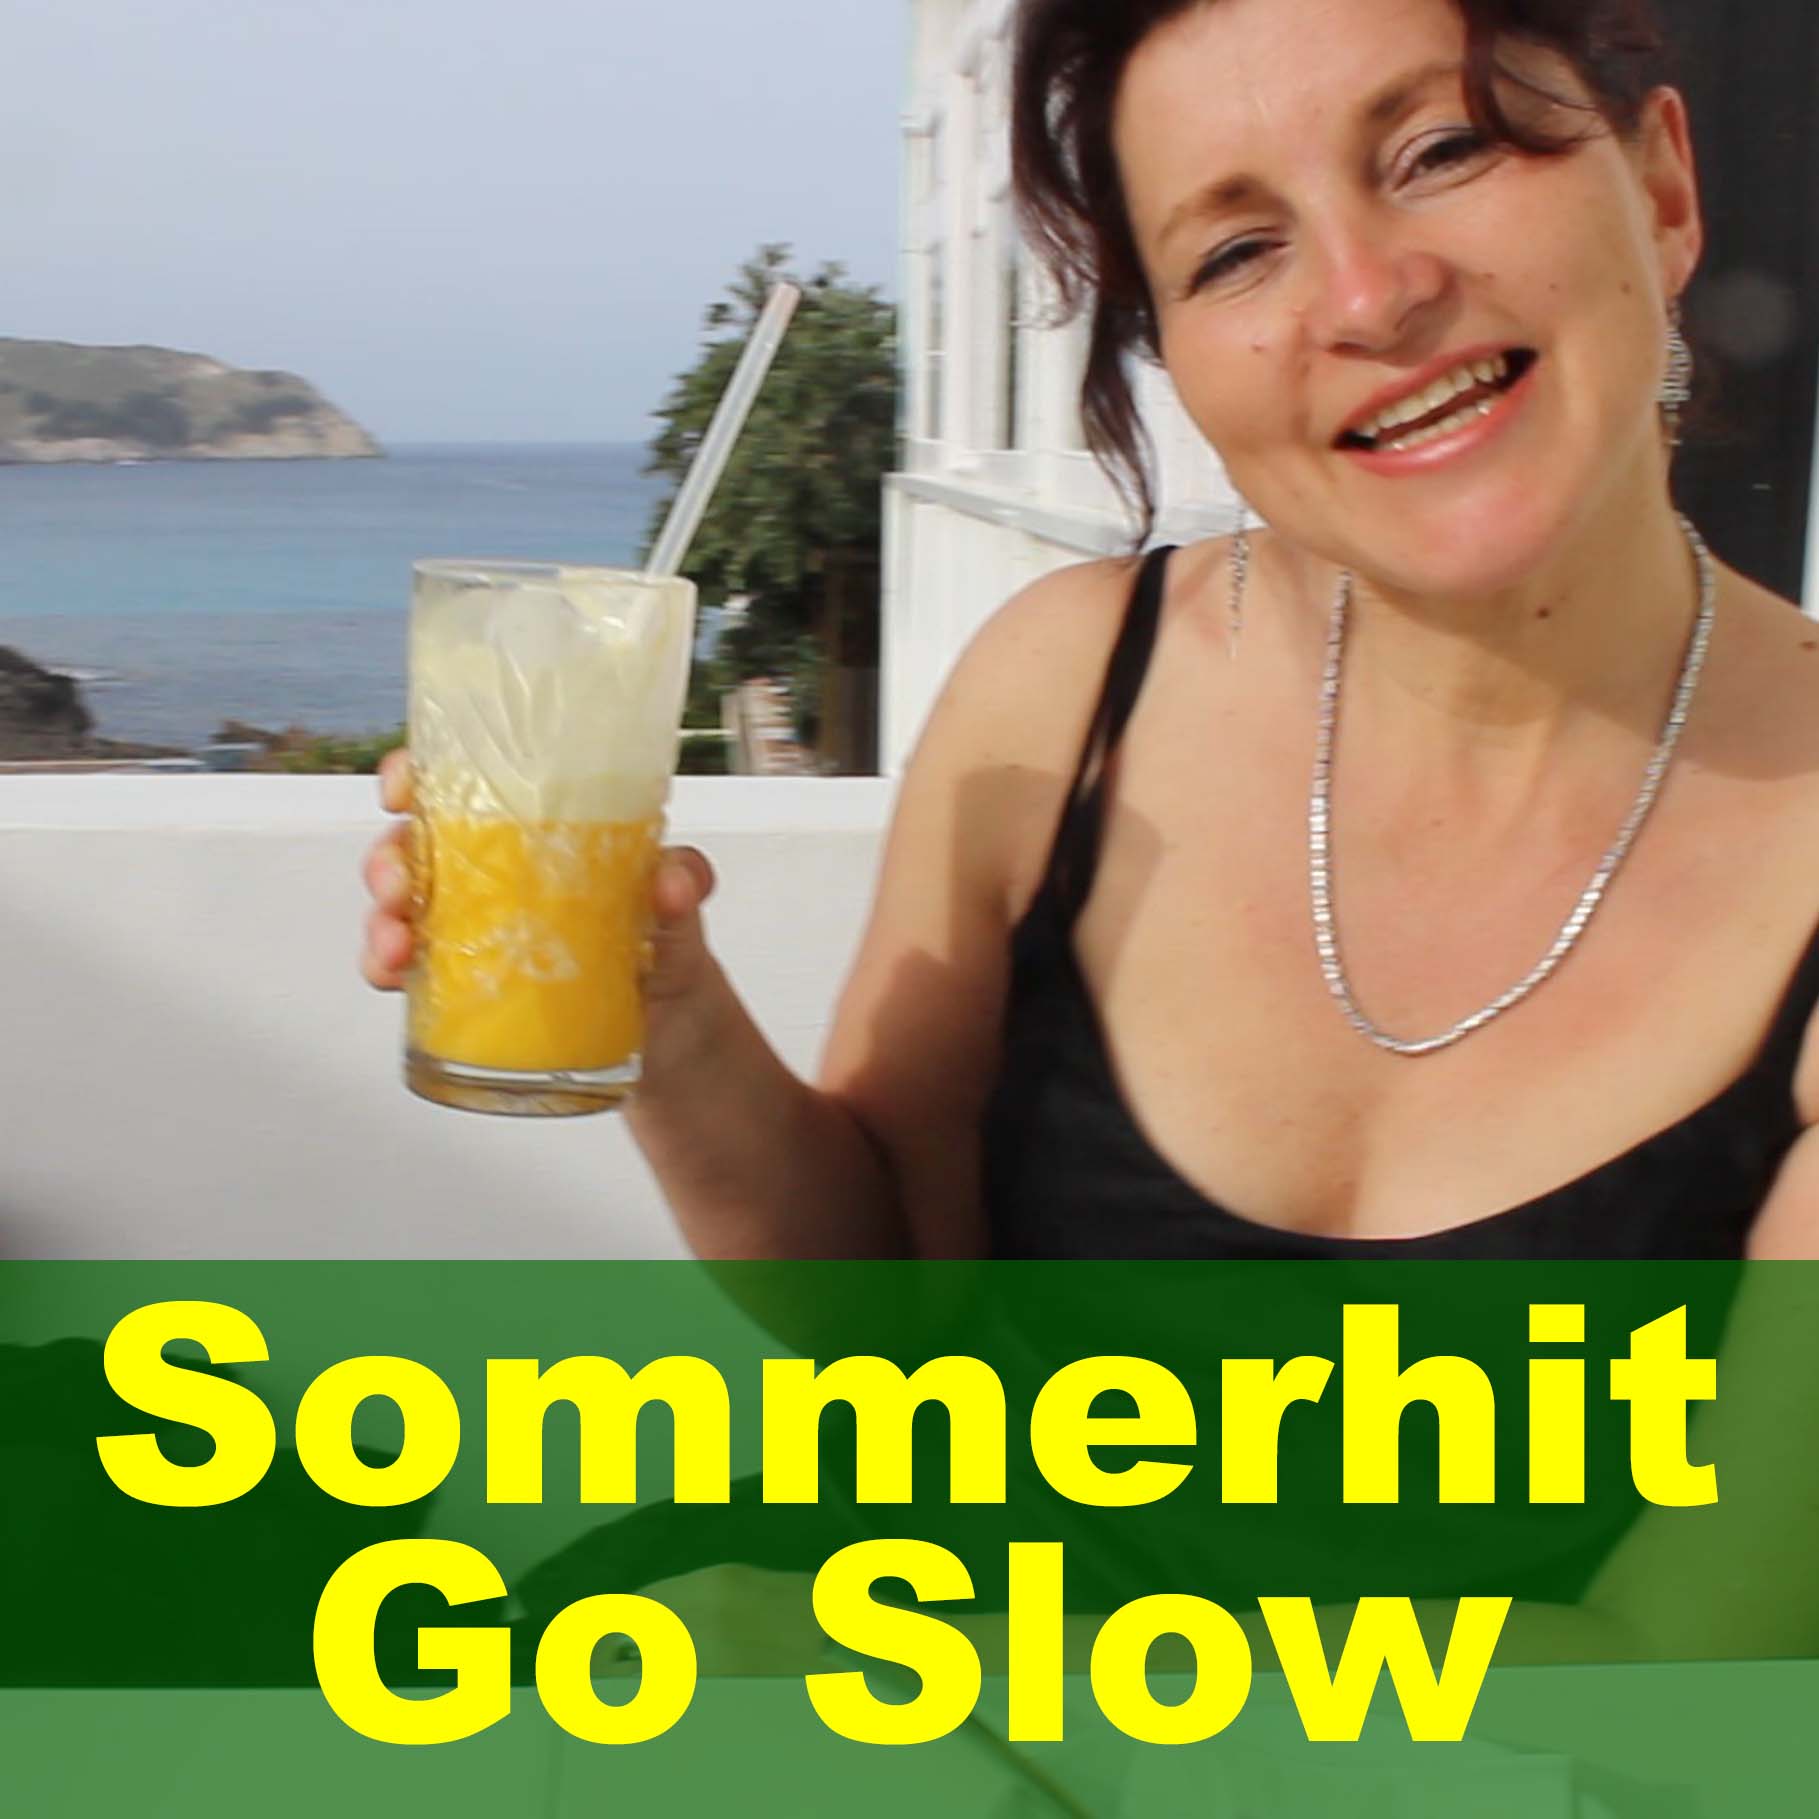 Sommerhit Go Slow